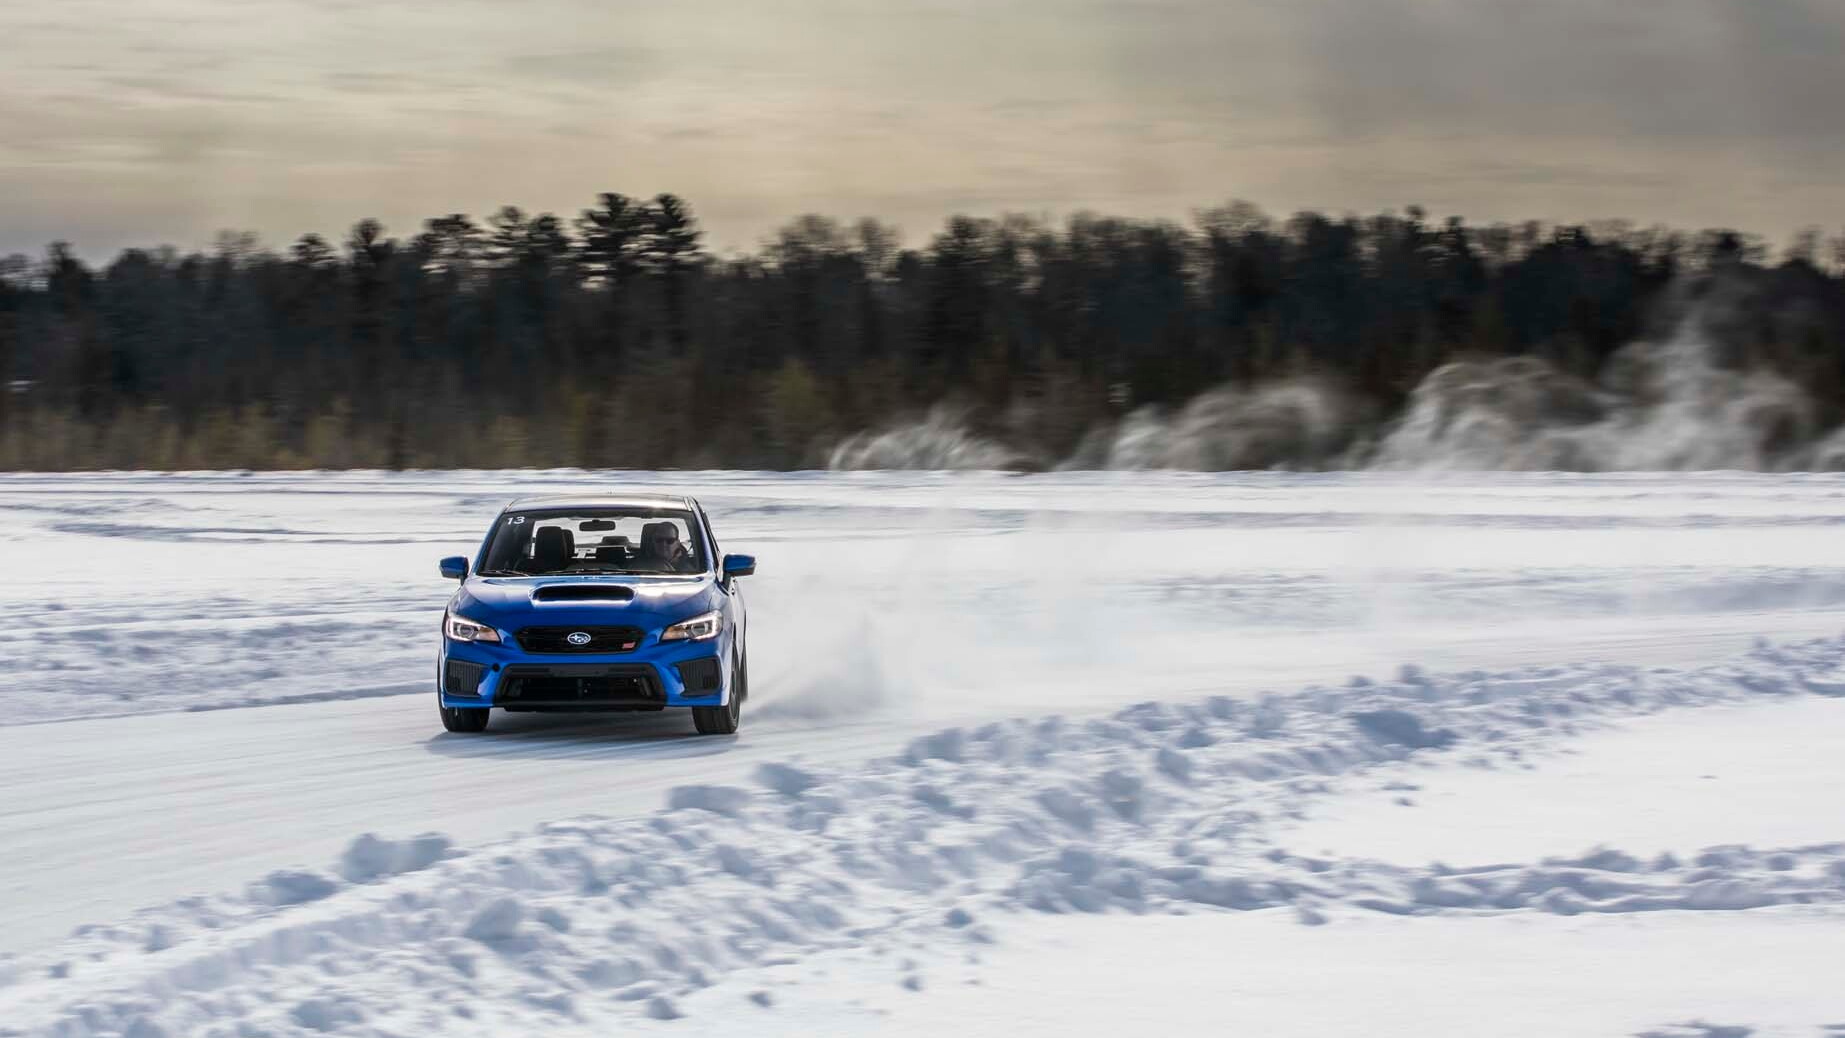 2018 Subaru Winter Sporting event